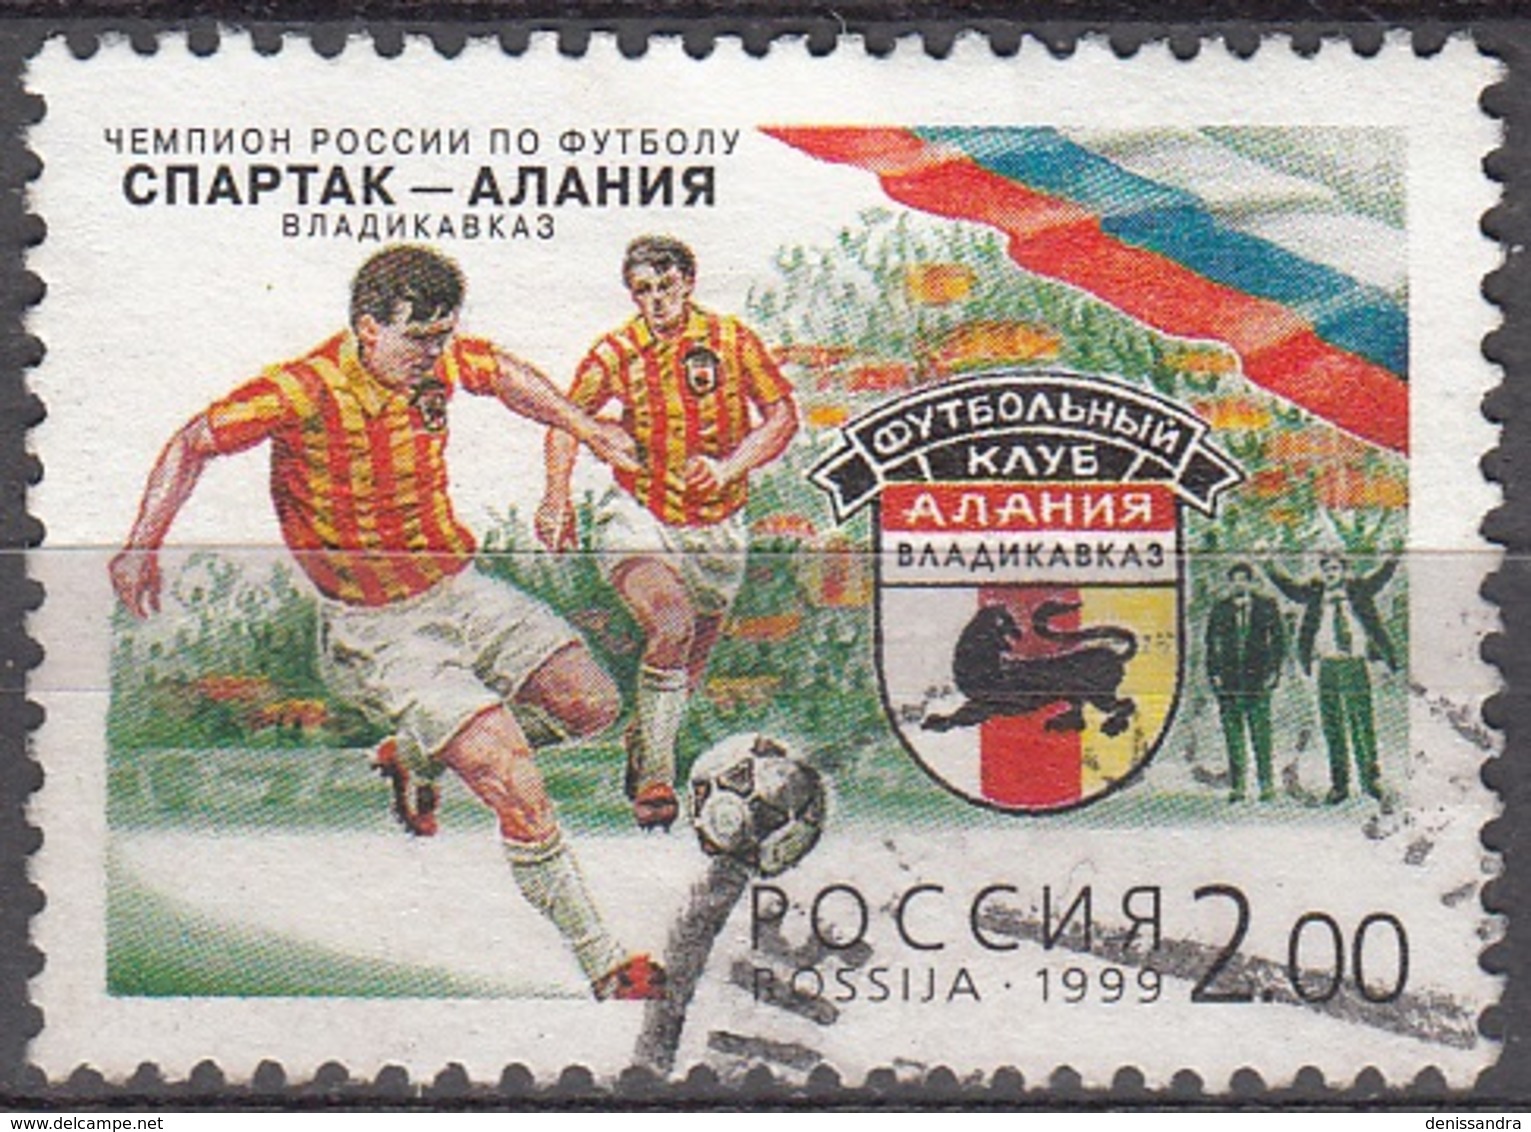 Rossija 1999 Michel 775 O Cote (2008) 0.20 Euro 1995 Spartak-Alania Vladikavkaz Remporte Le Championnat Cachet Rond - Gebraucht